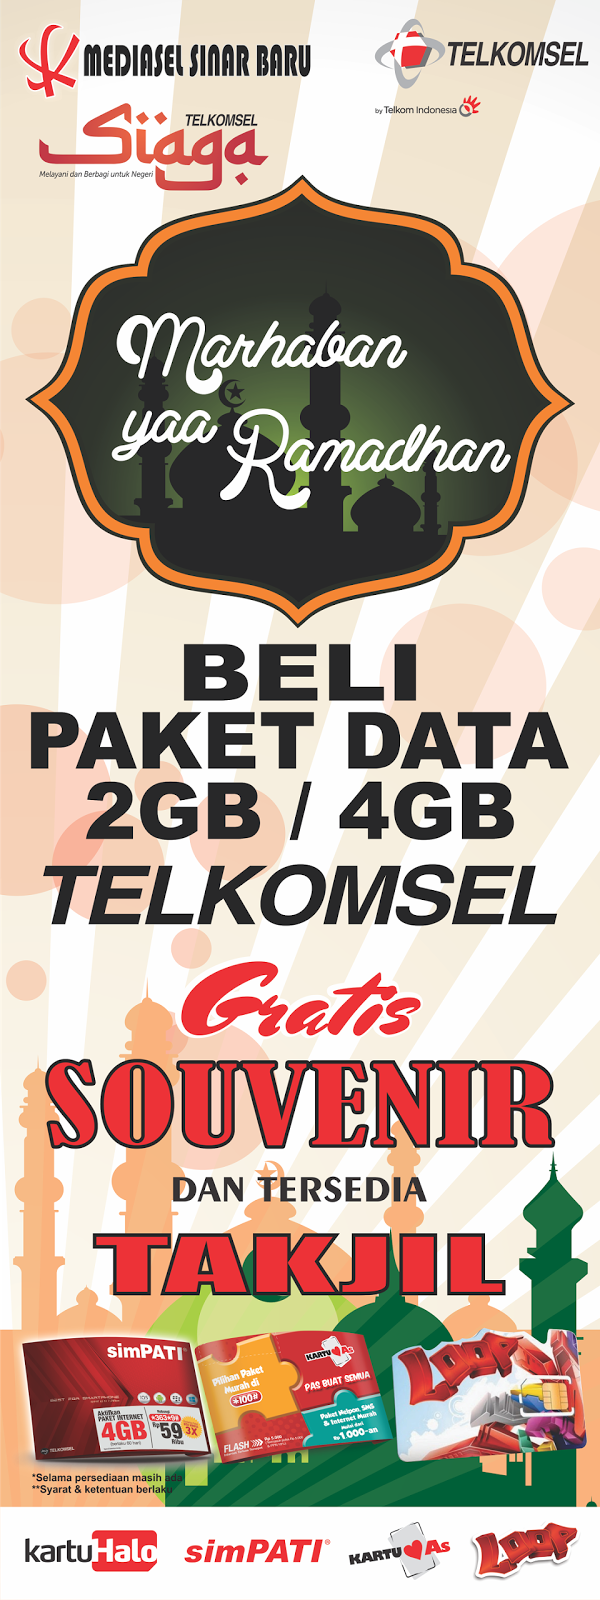 Promo Terbaru Telkomsel - Mediasel Sinar Baru (MSB ...